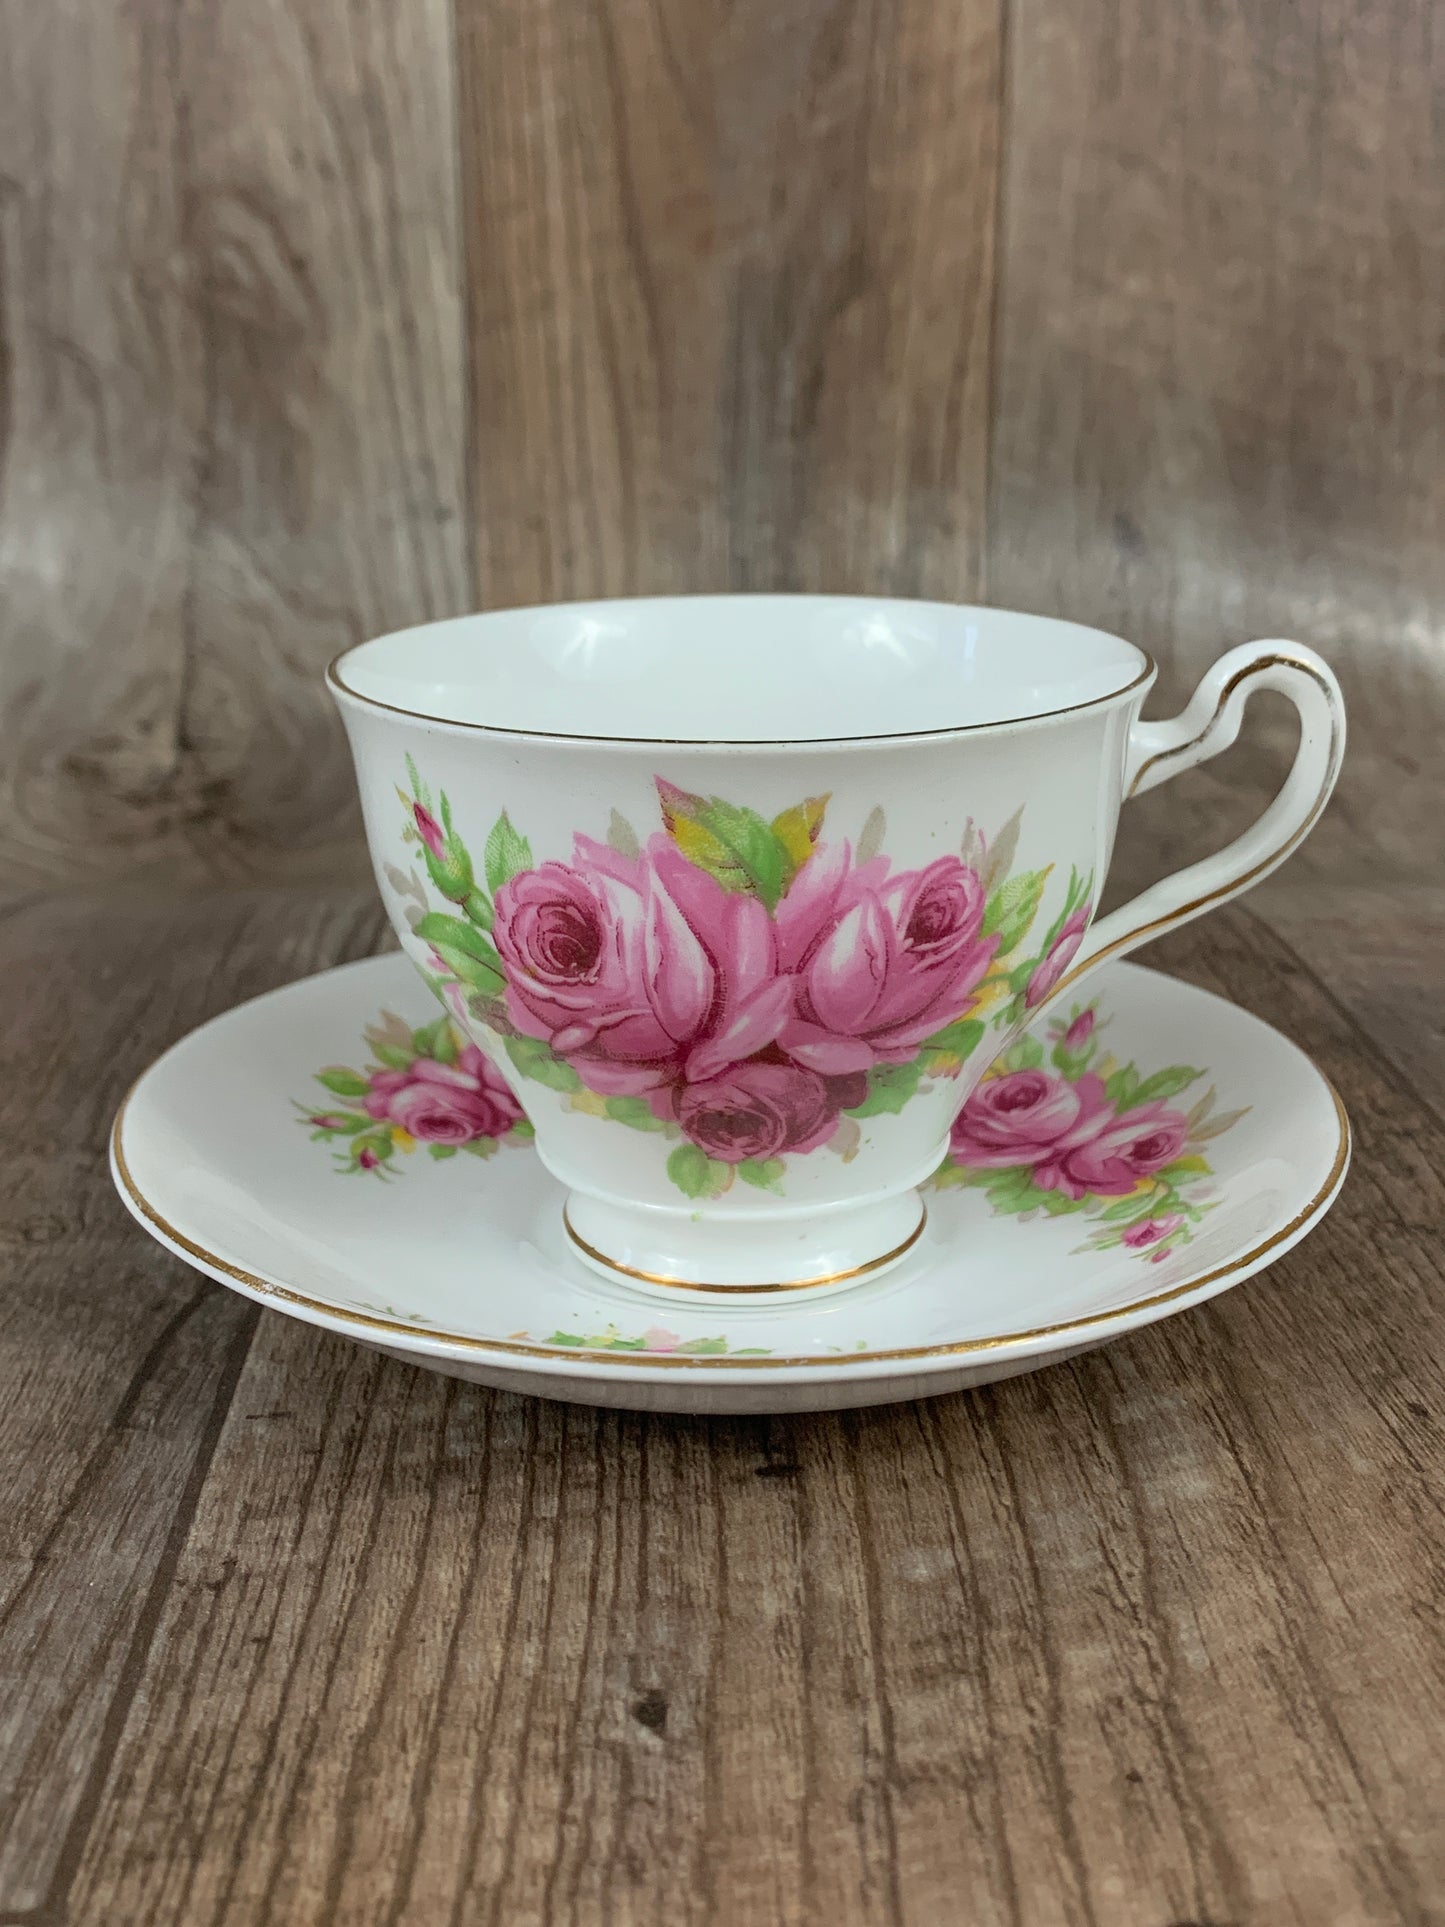 Pink Floral Vintage Teacup and Saucer Made in England Bone China Vintage Tea Cup